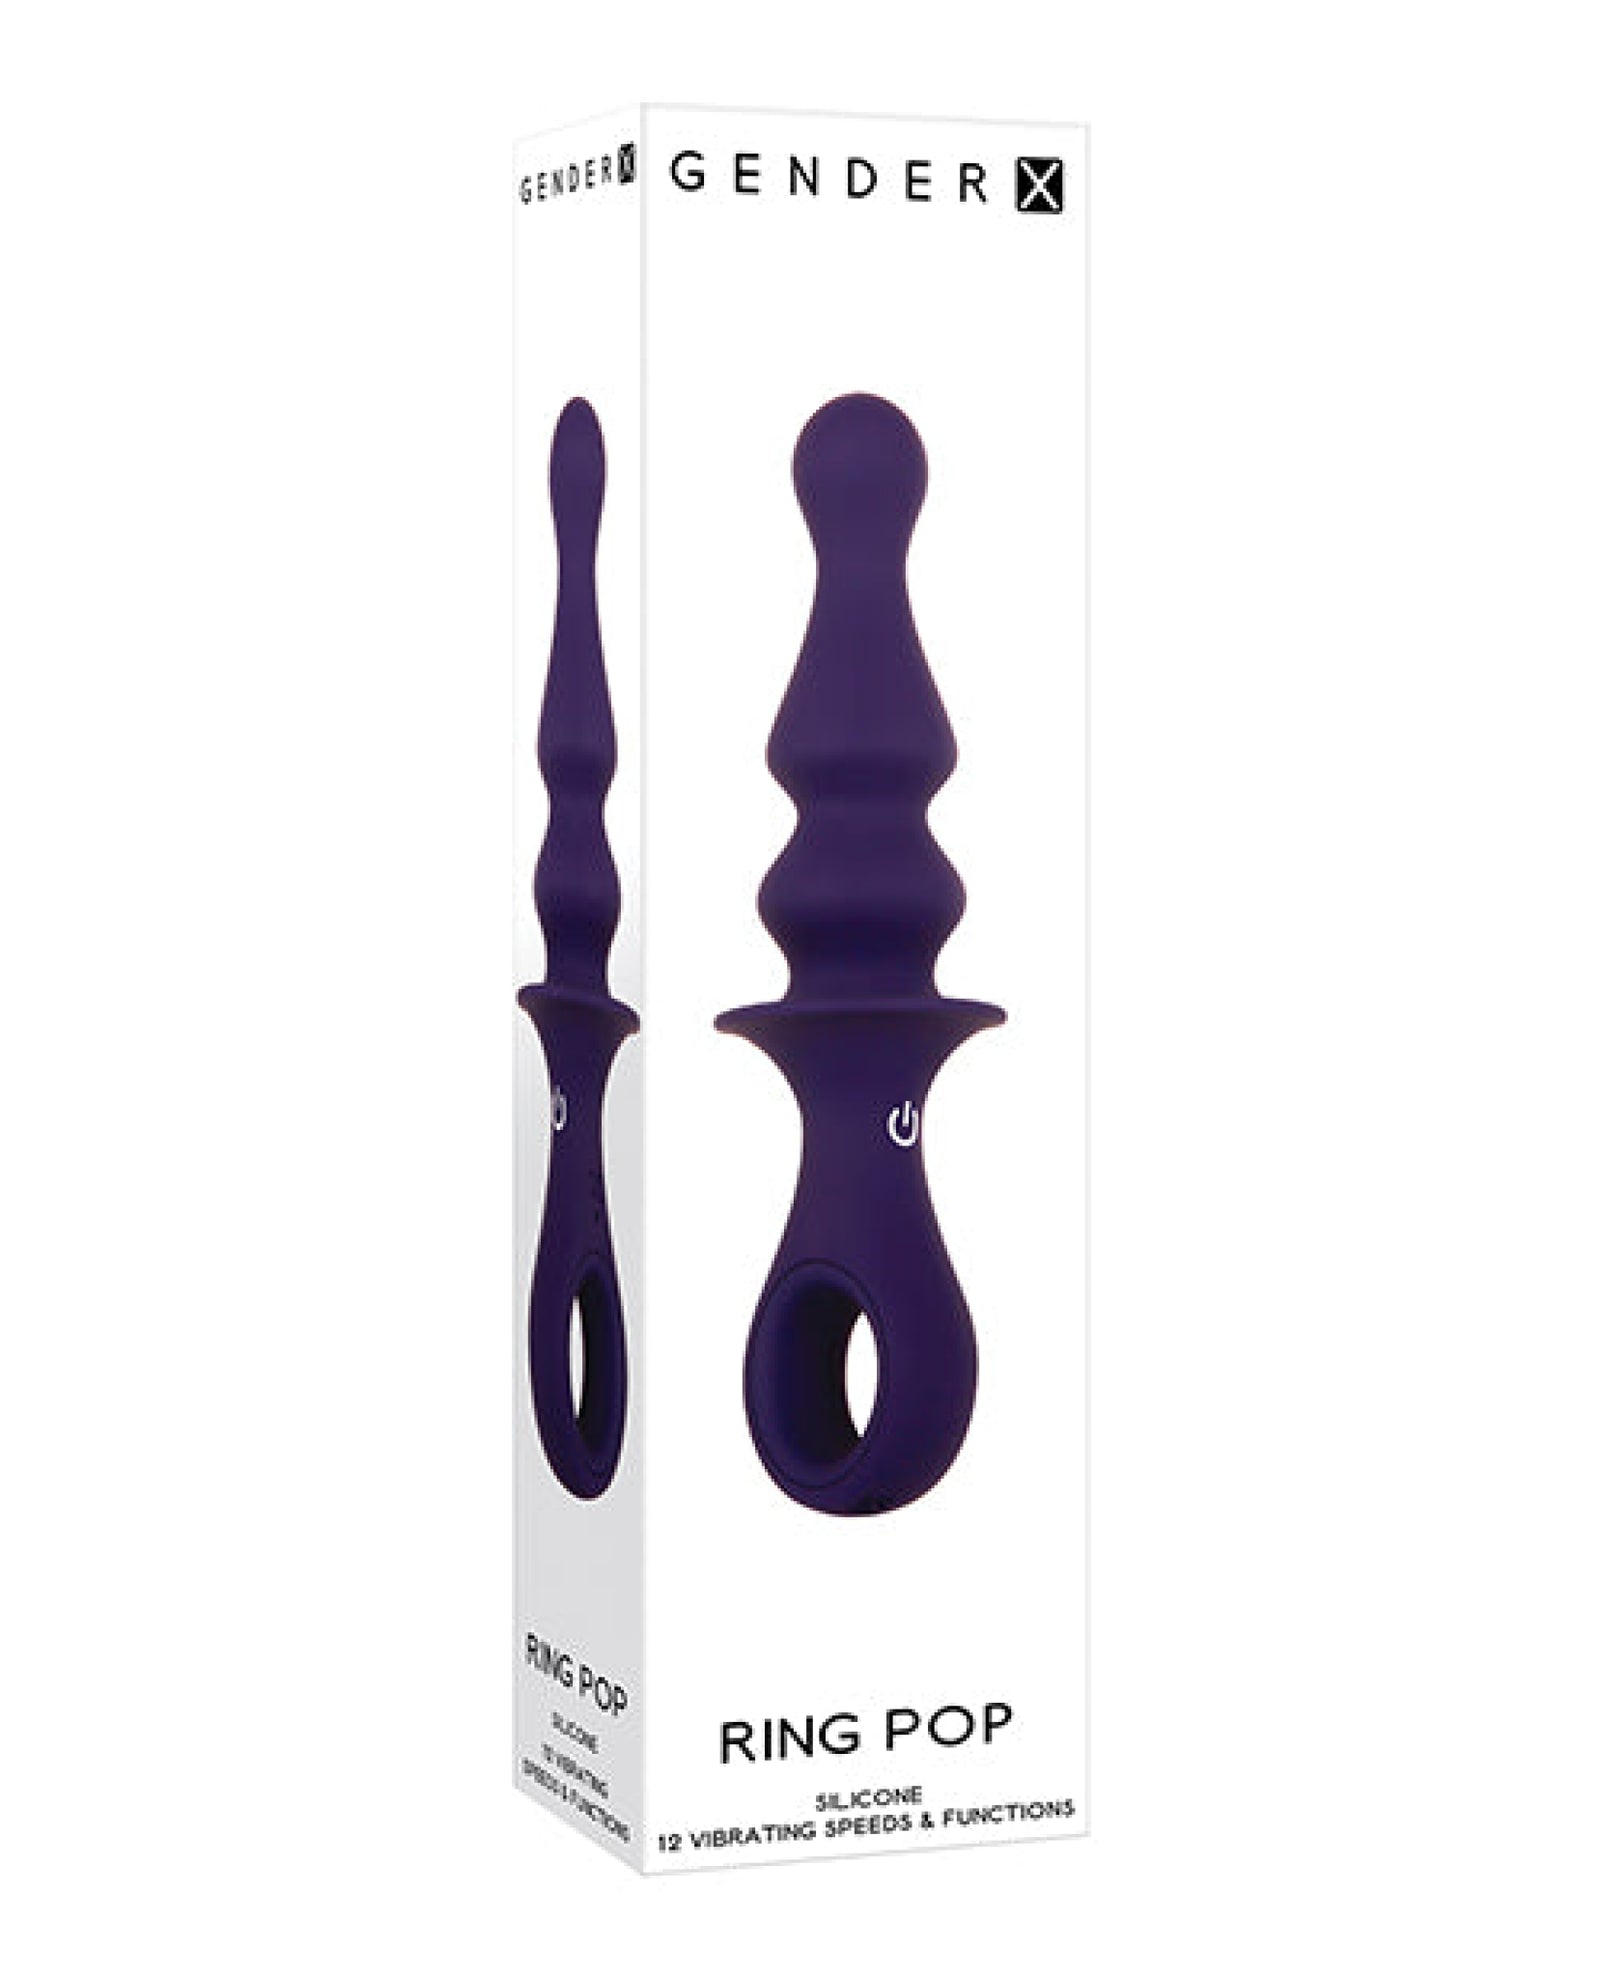 Gender X Ring Pop - Purple Gender X